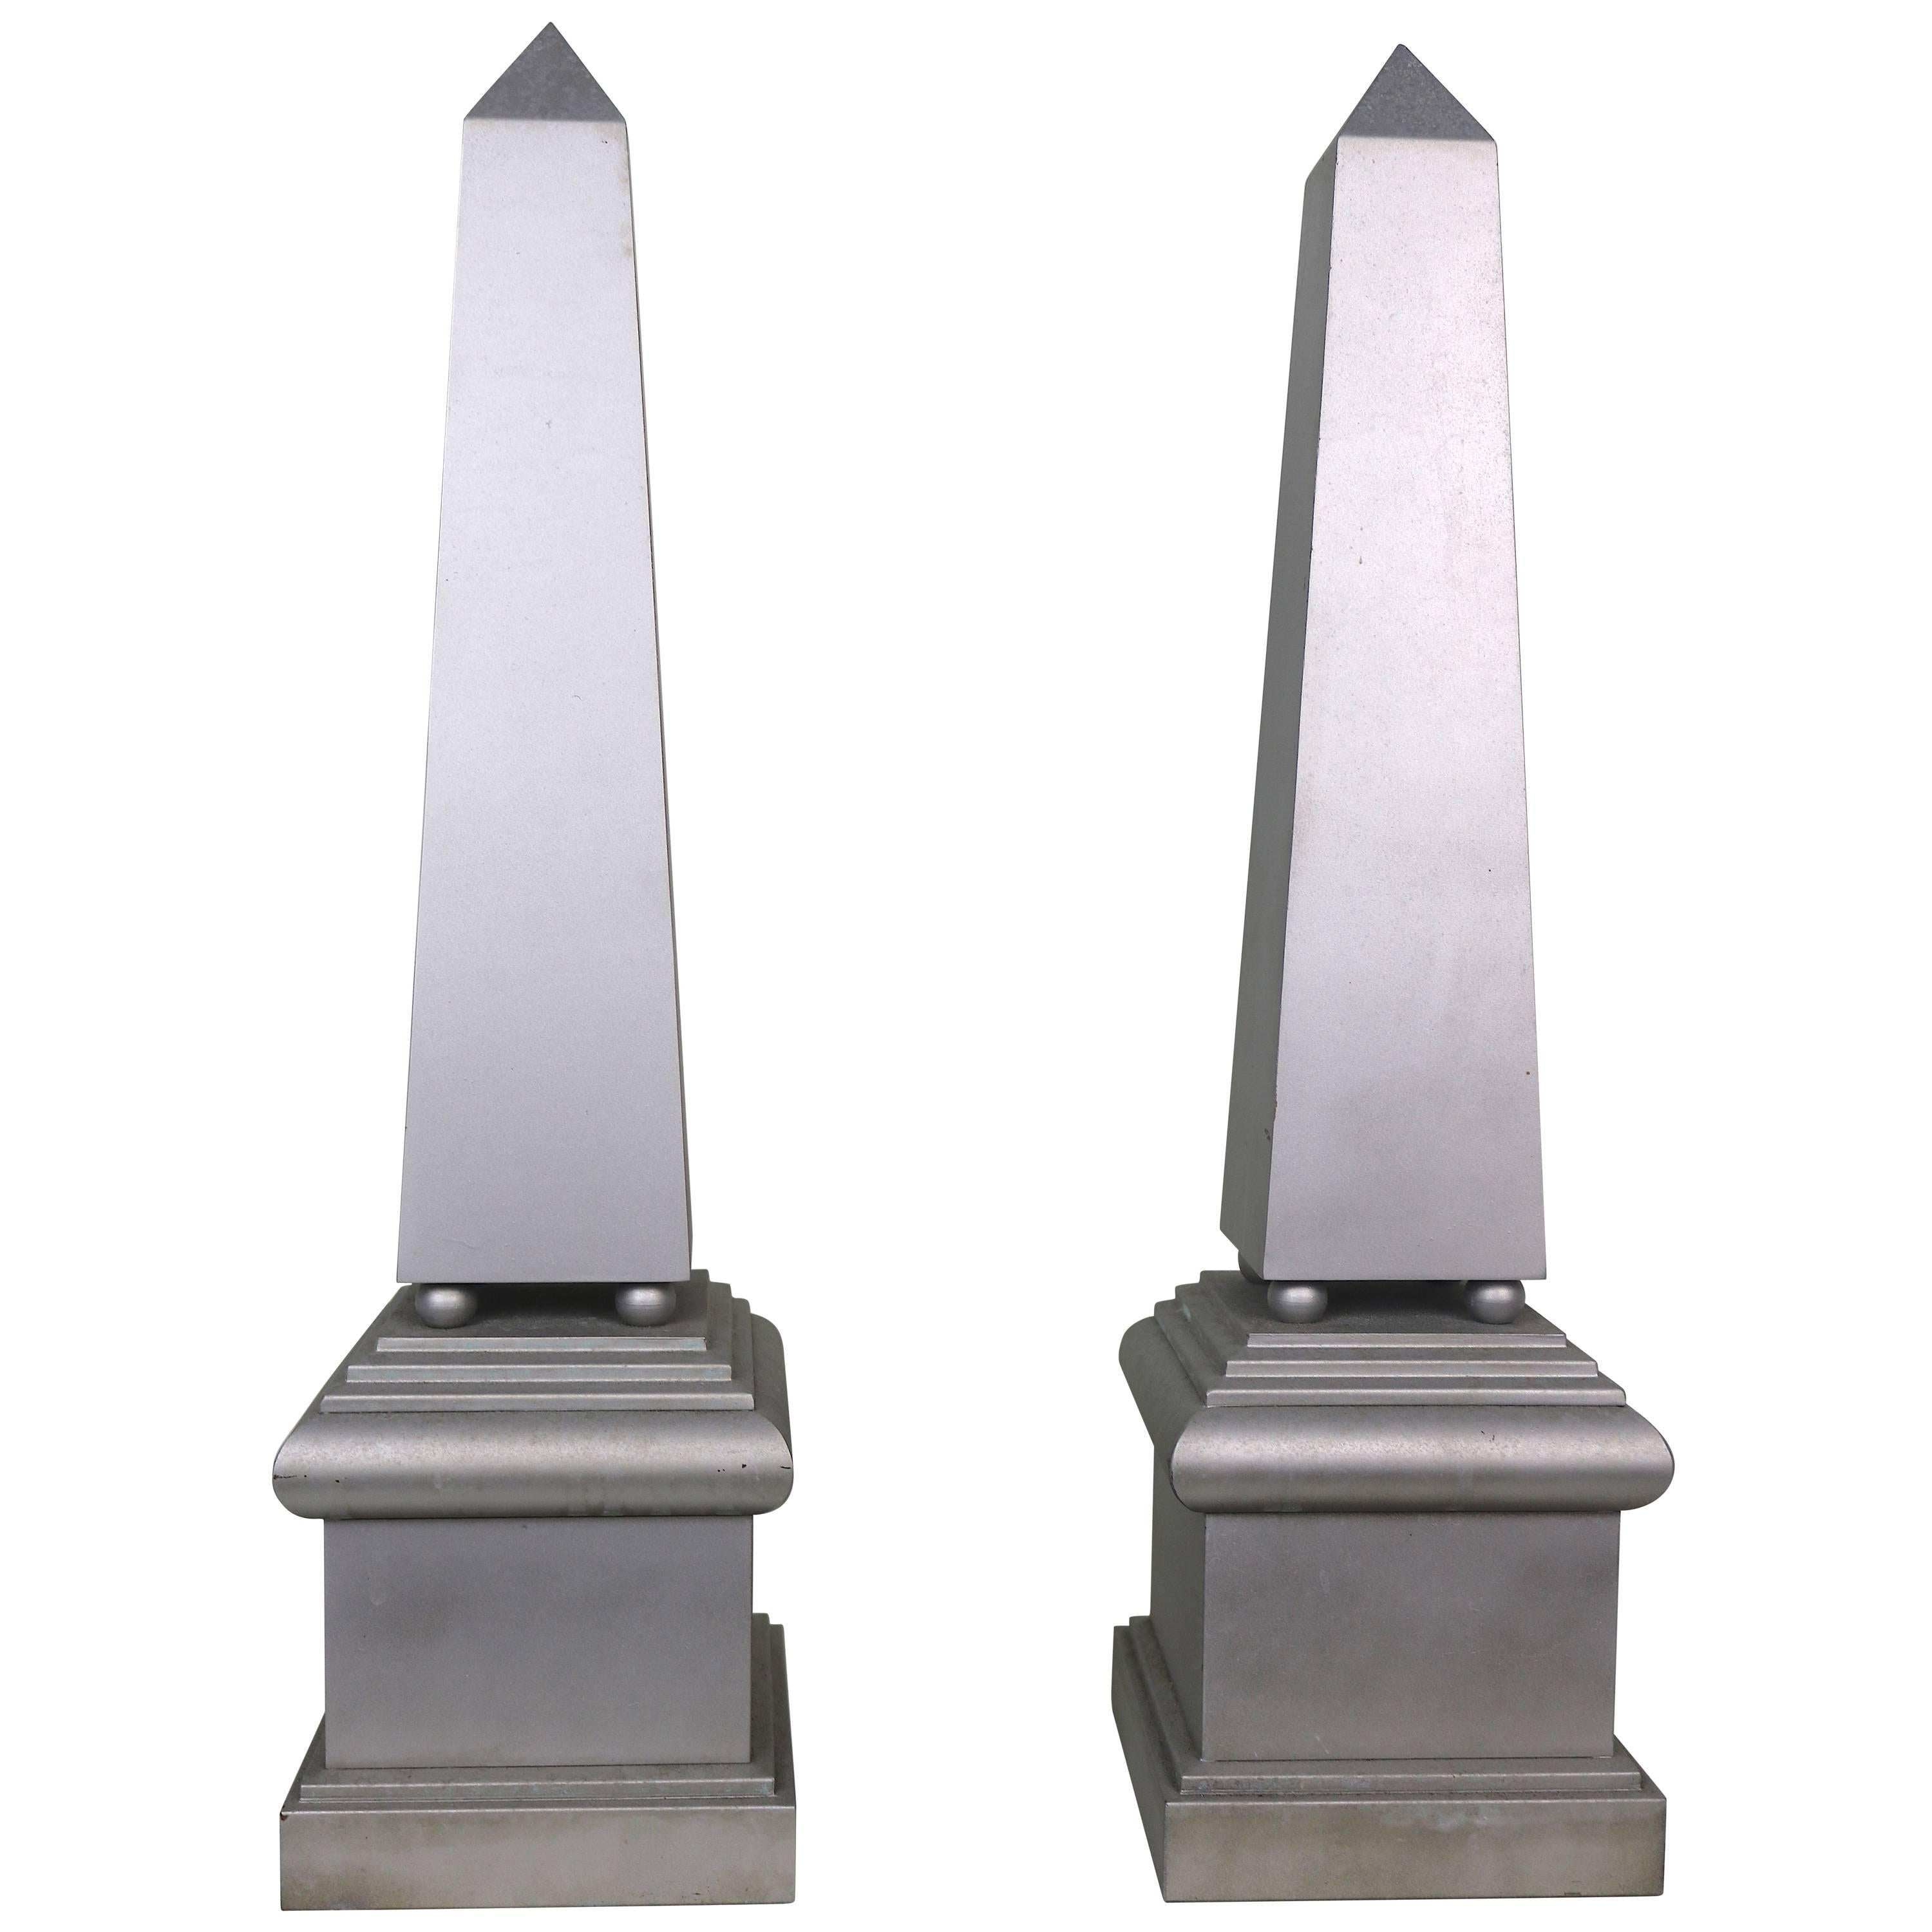 Sleek Pair Modern Minimalist Articulated Silver Obelisks- Large 2 ft. High For Sale